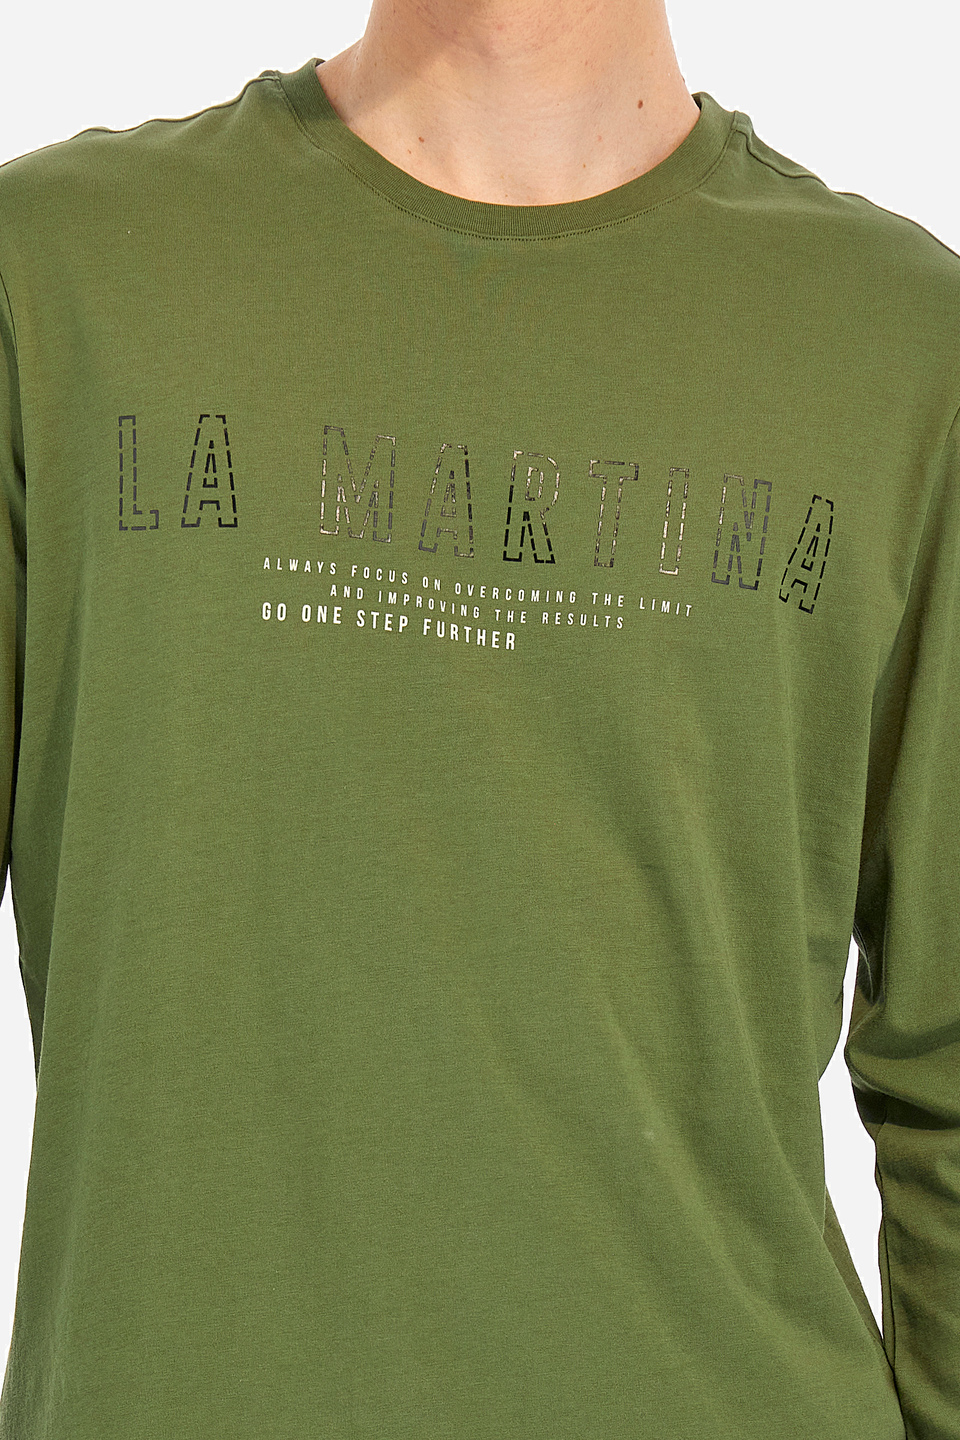 Herren-T-Shirt Regular Fit - Willmer | La Martina - Official Online Shop